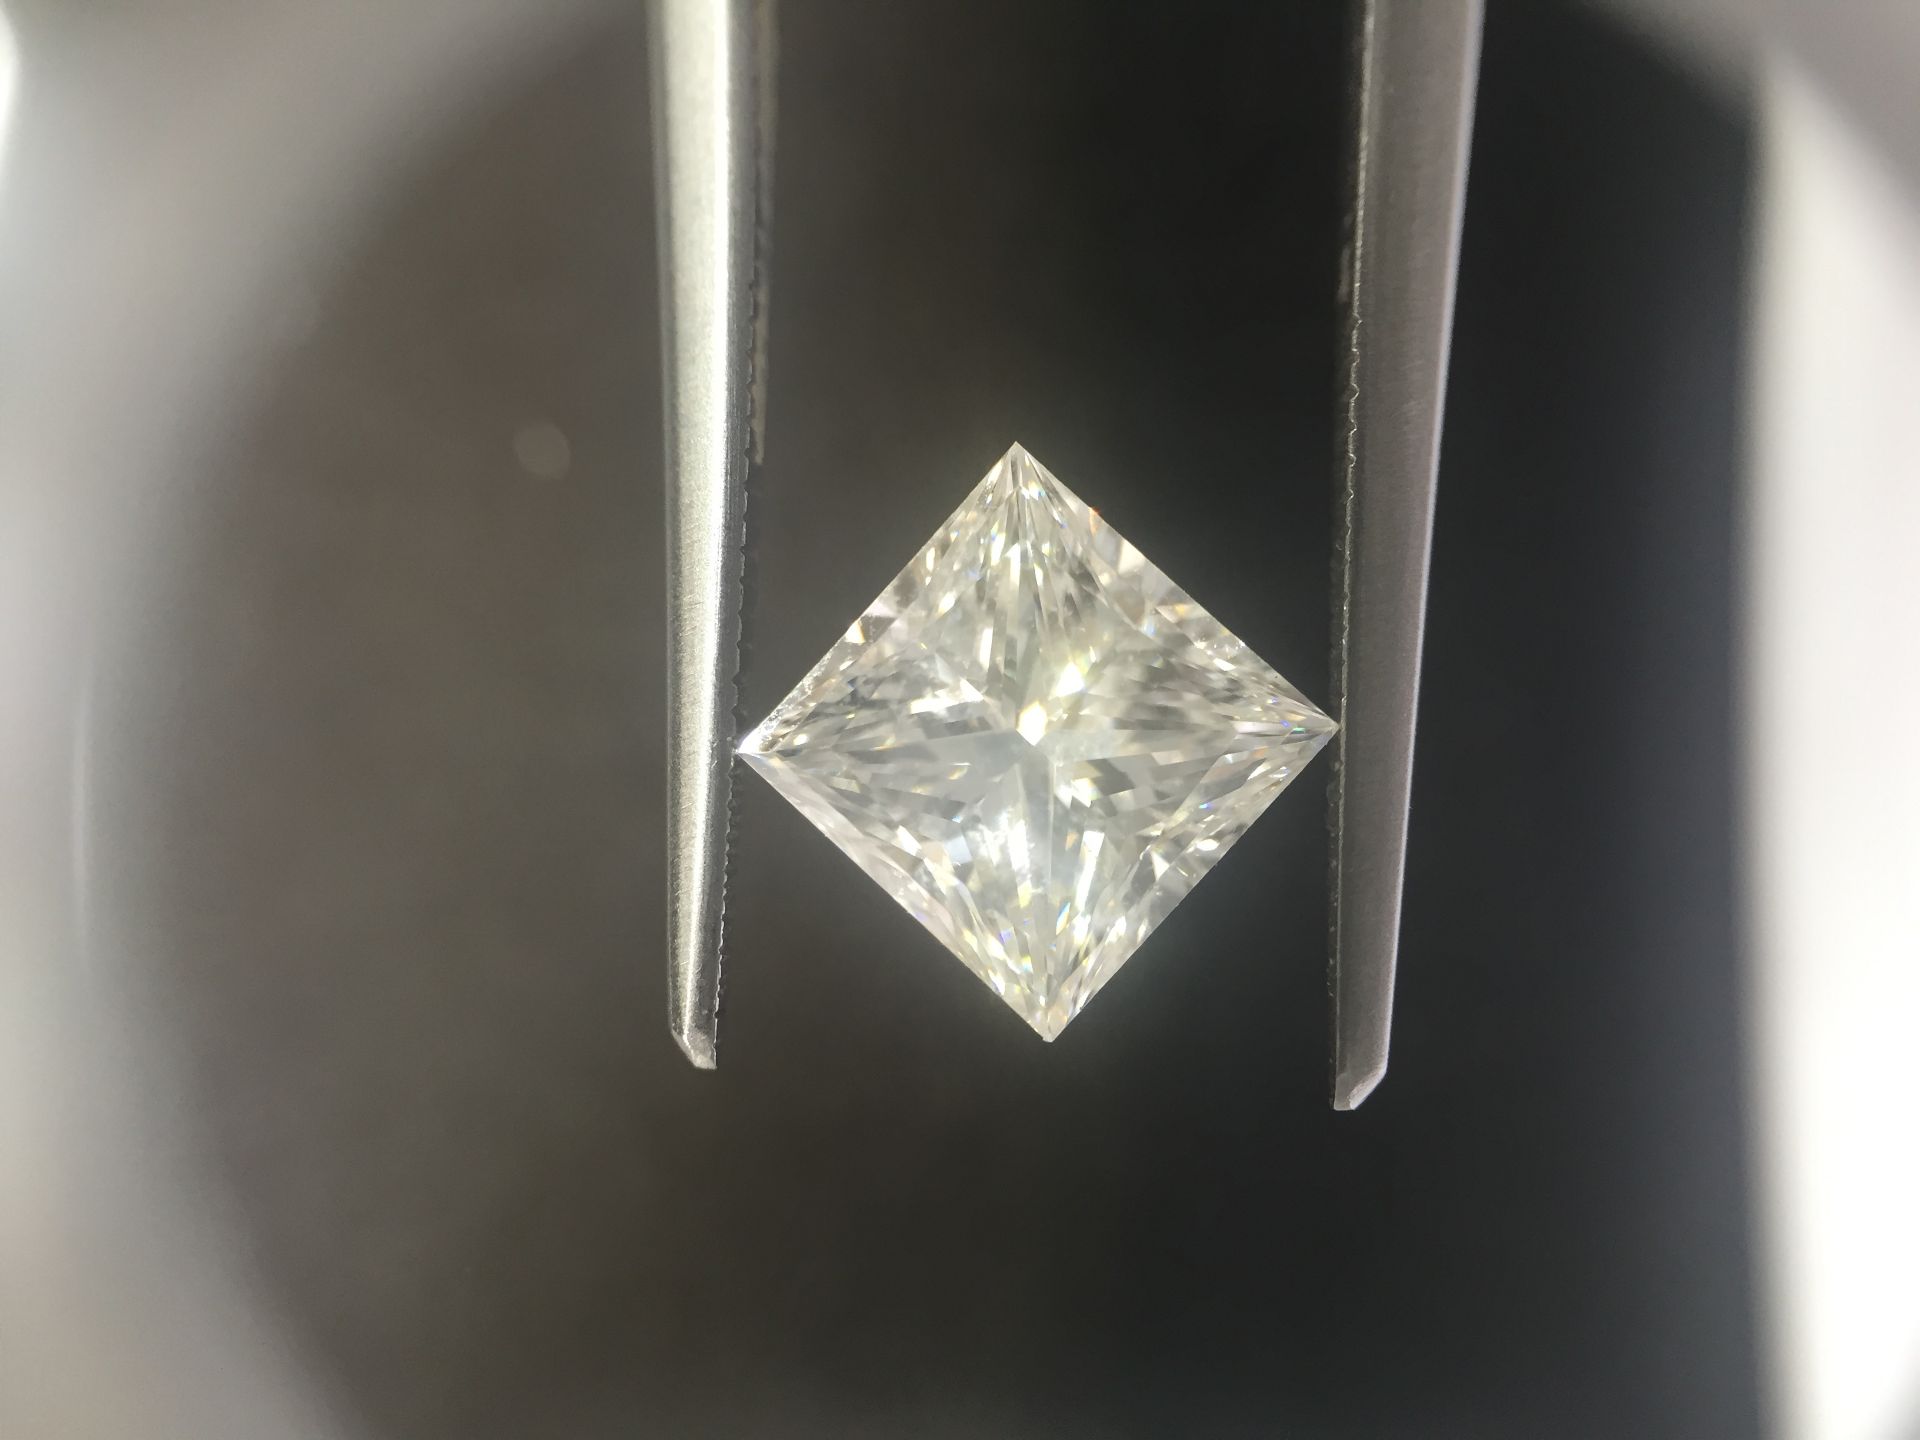 1.75ct princess cut diamond. G colour, VS1 clarity. GIA certification Ð 5226112422. 6.75 x 6.68 x